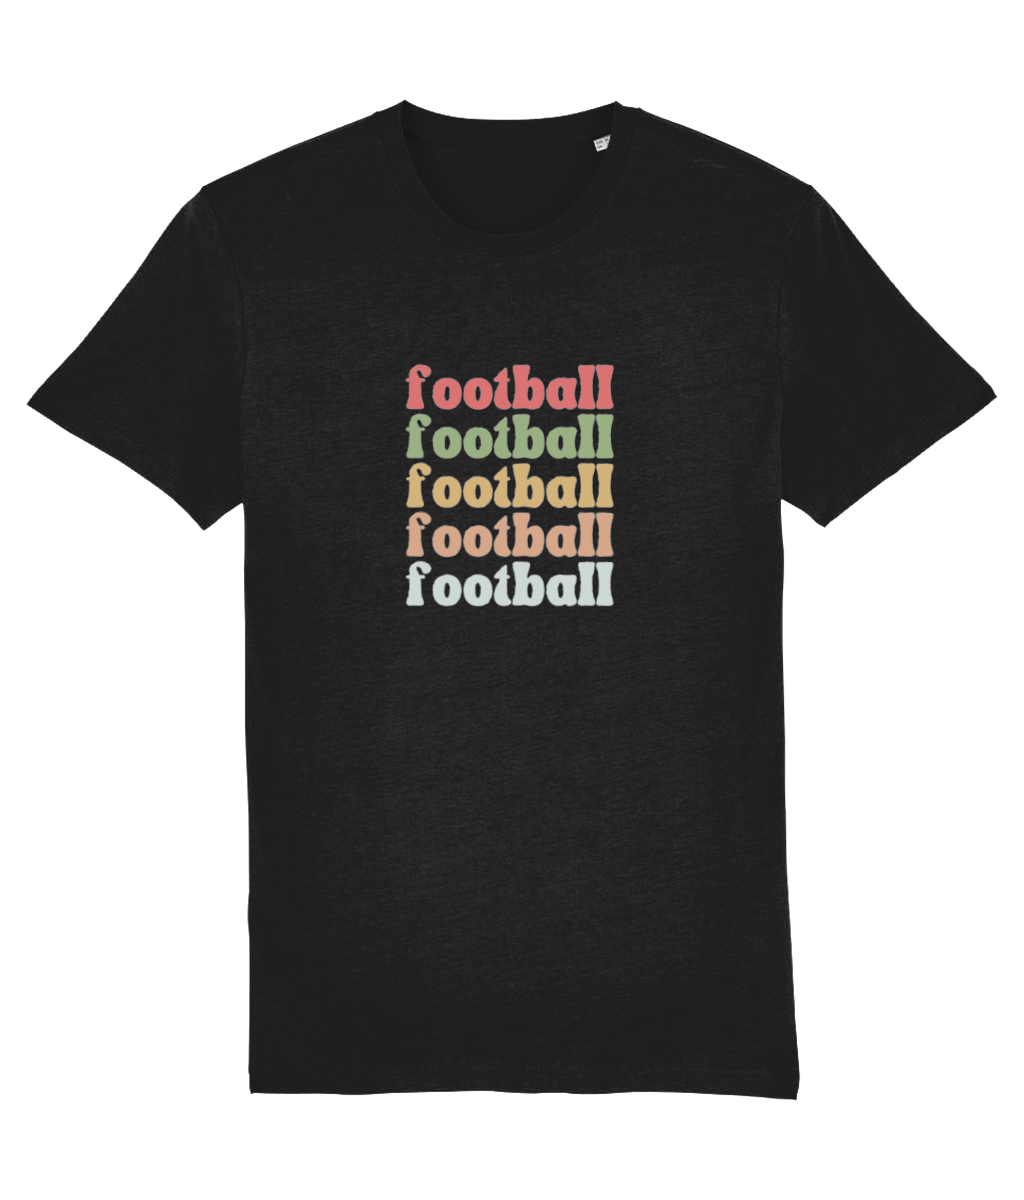 Retro Style Football T-Shirt